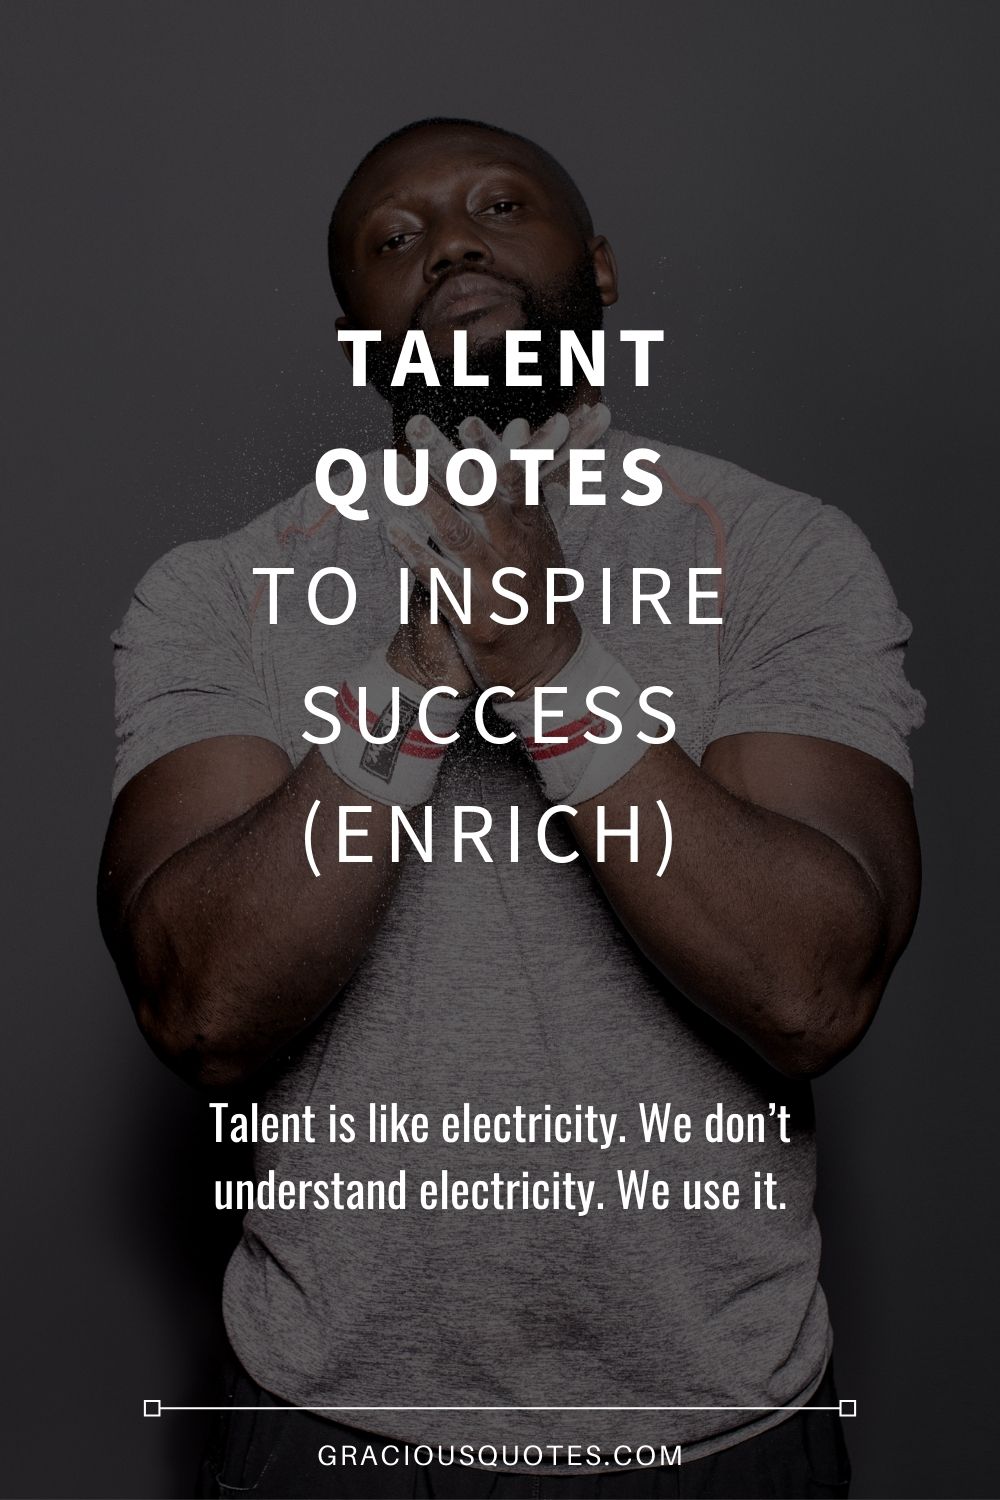 Talent Quotes to Inspire Success (ENRICH) - Gracious Quotes